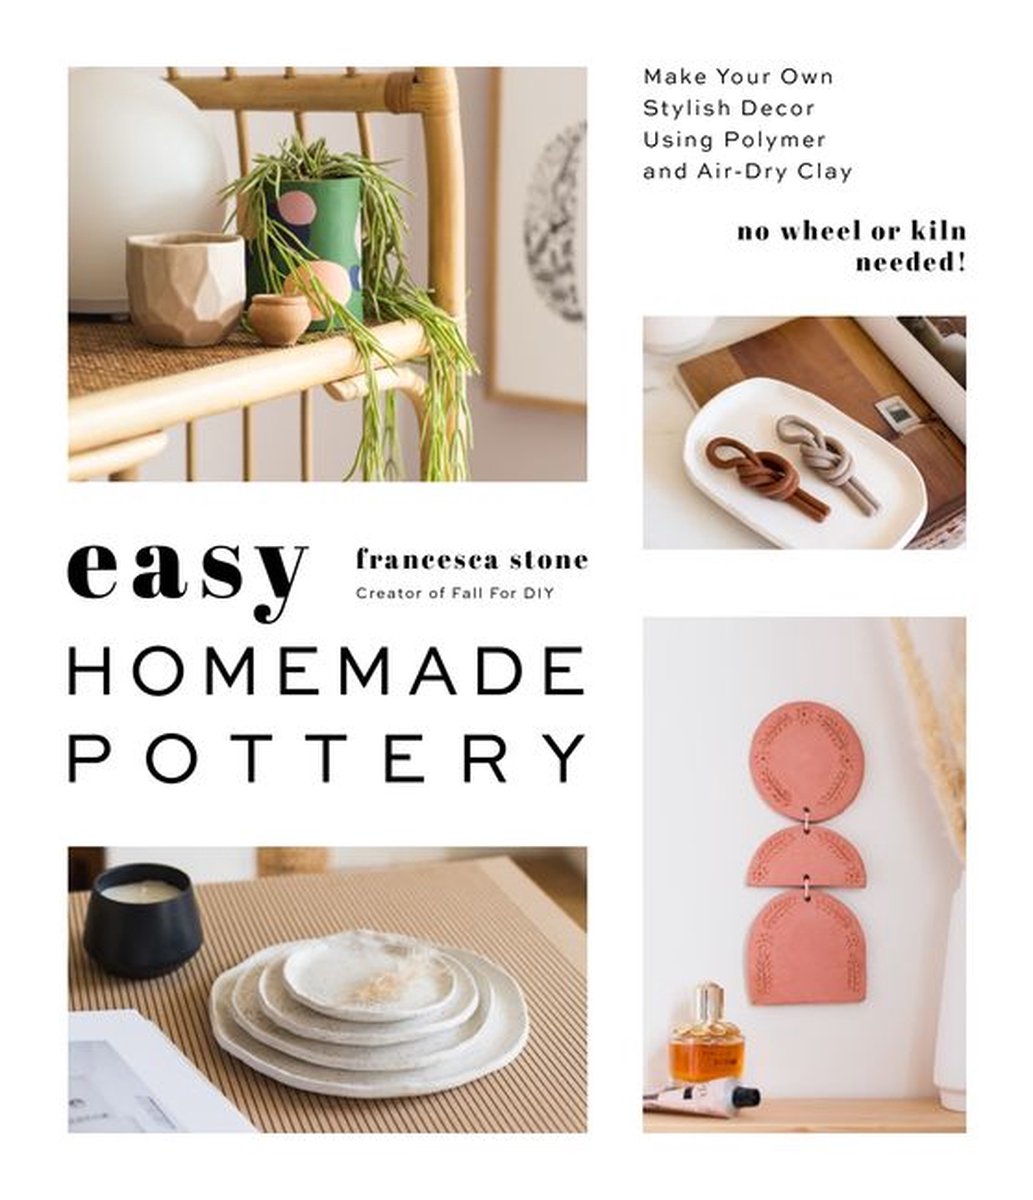 Easy Homemade Pottery - Francesca Stone